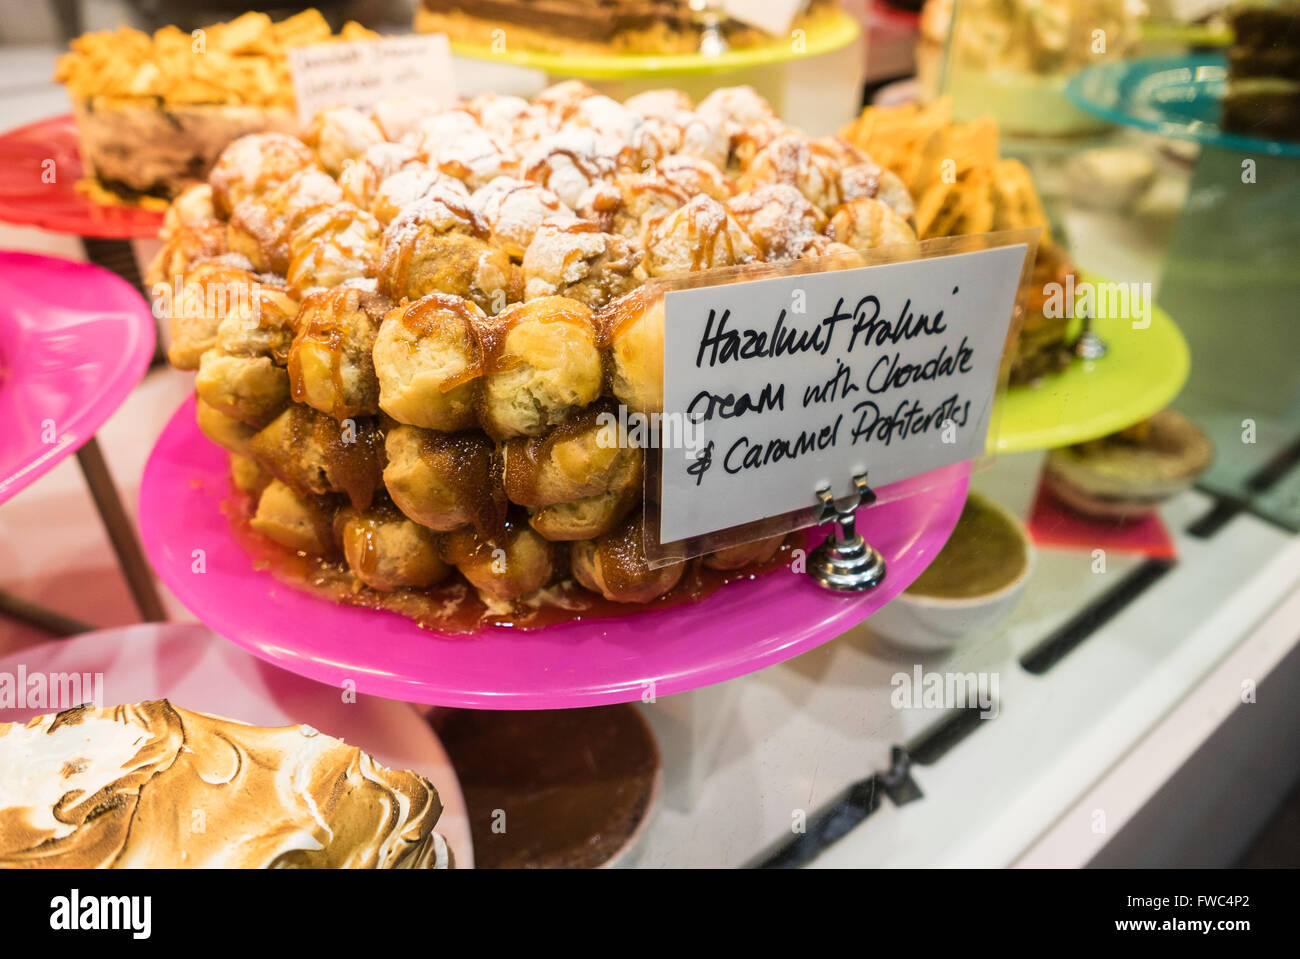 Praliné de avellana Crema Postre profiteroles con caramelo en la pantalla en un restaurante Foto de stock